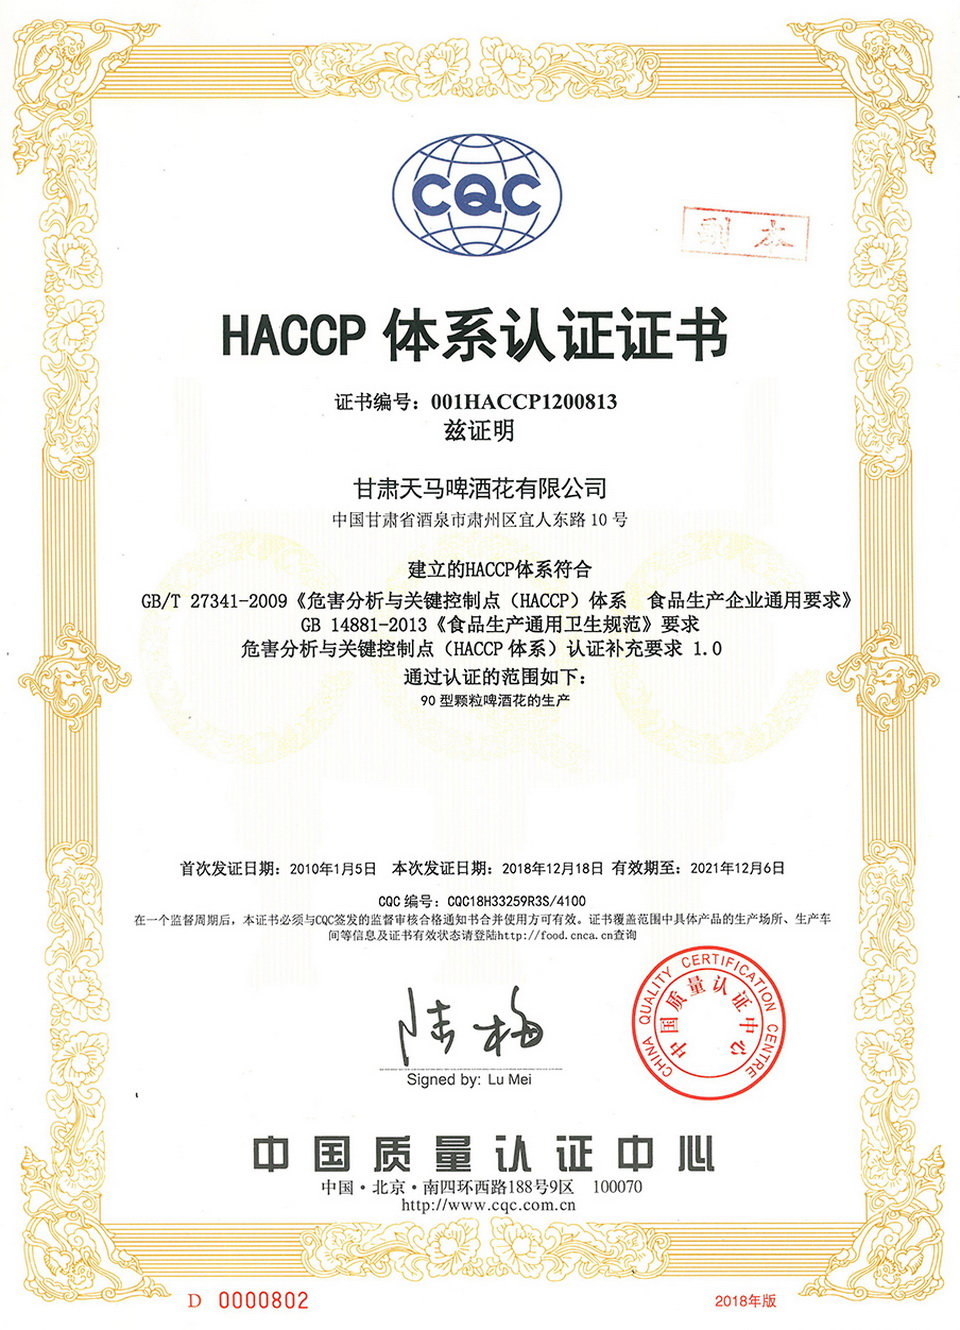 HACCP system certificate